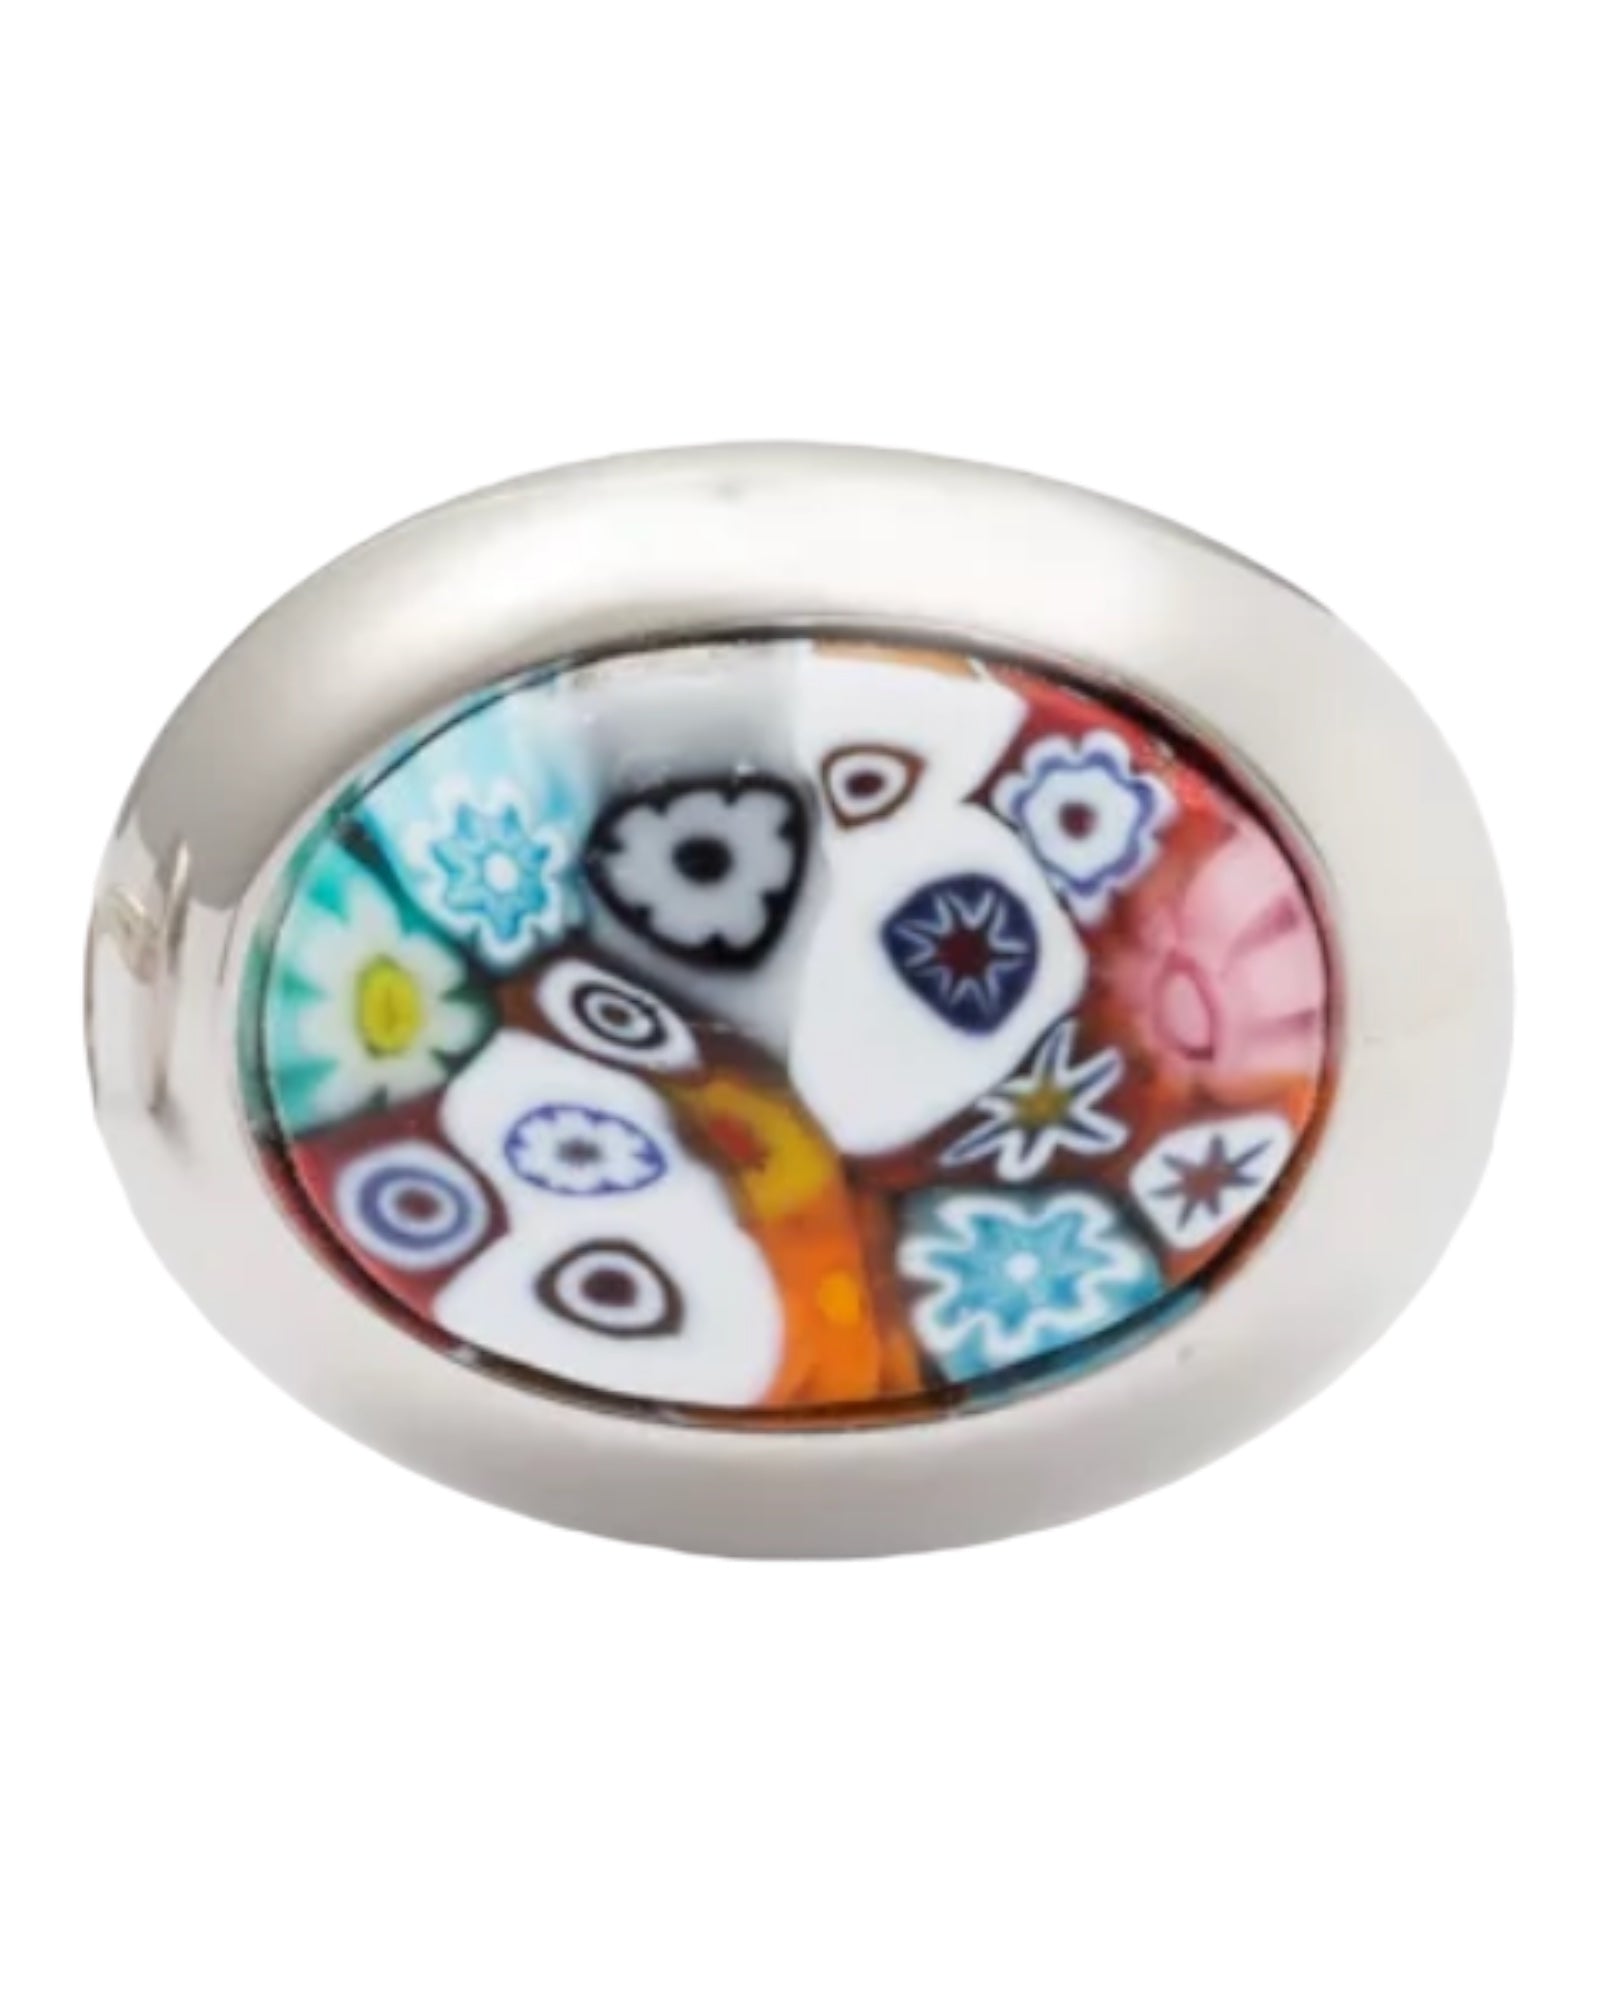 Oval Murano Glass Cufflinks - Multi Colour Cufflinks